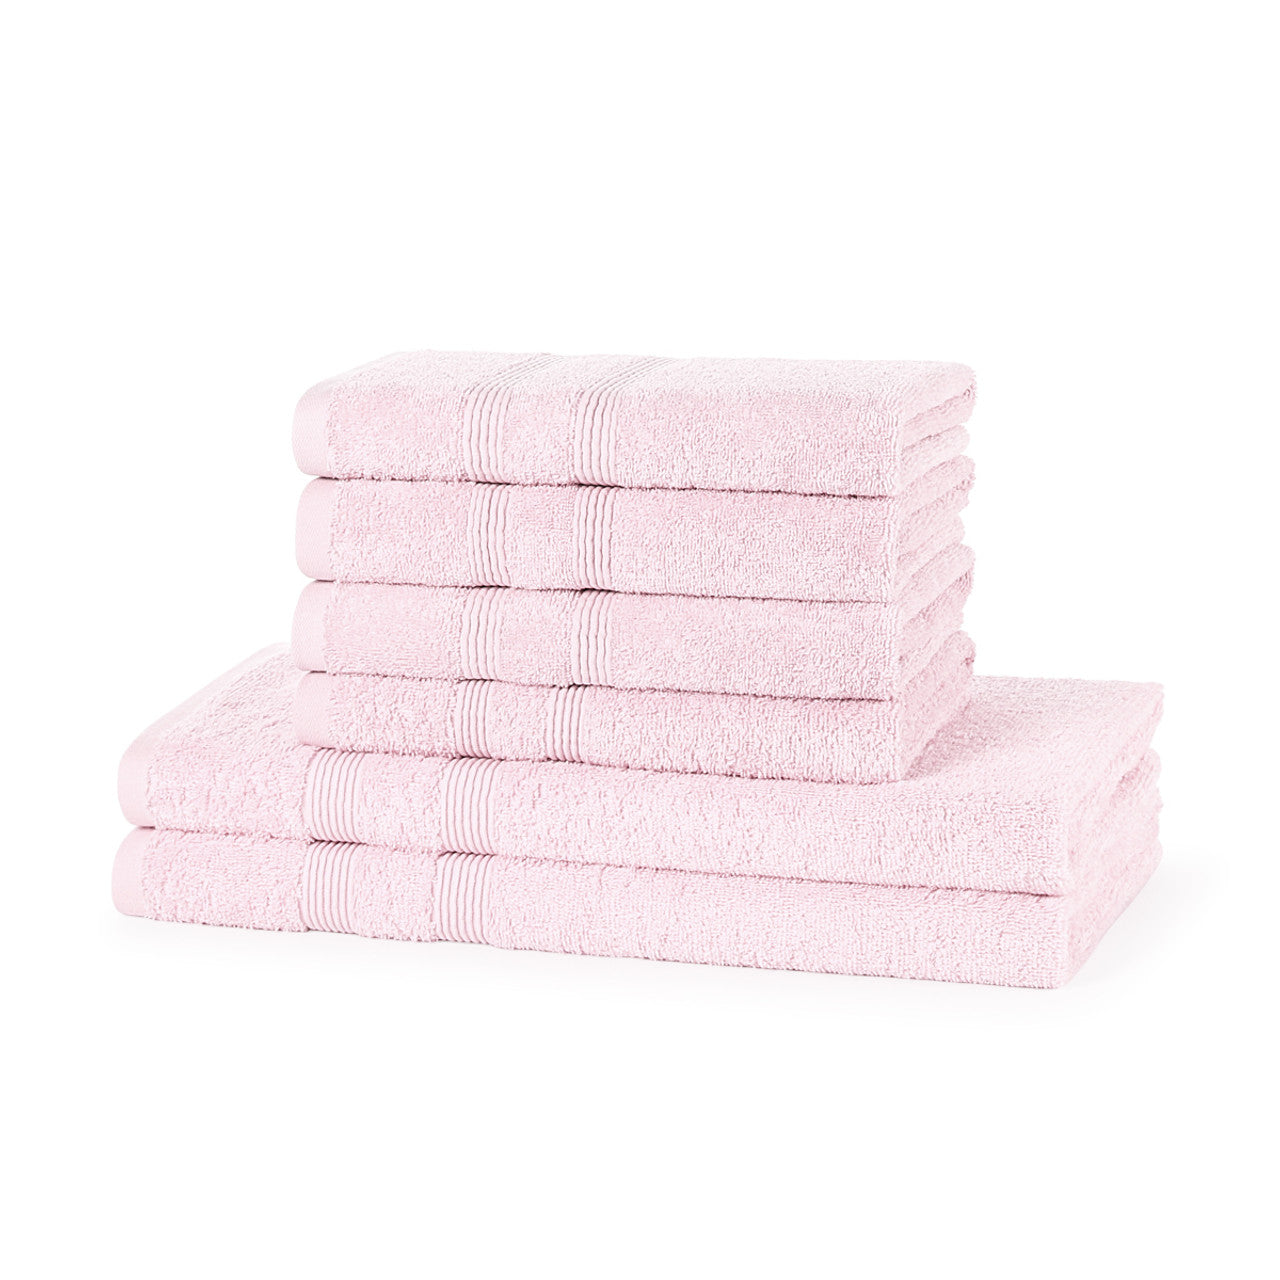 Super Soft 6 Piece 500GSM Towel Bale - 4 Hand Towels, 2 Bath Towels